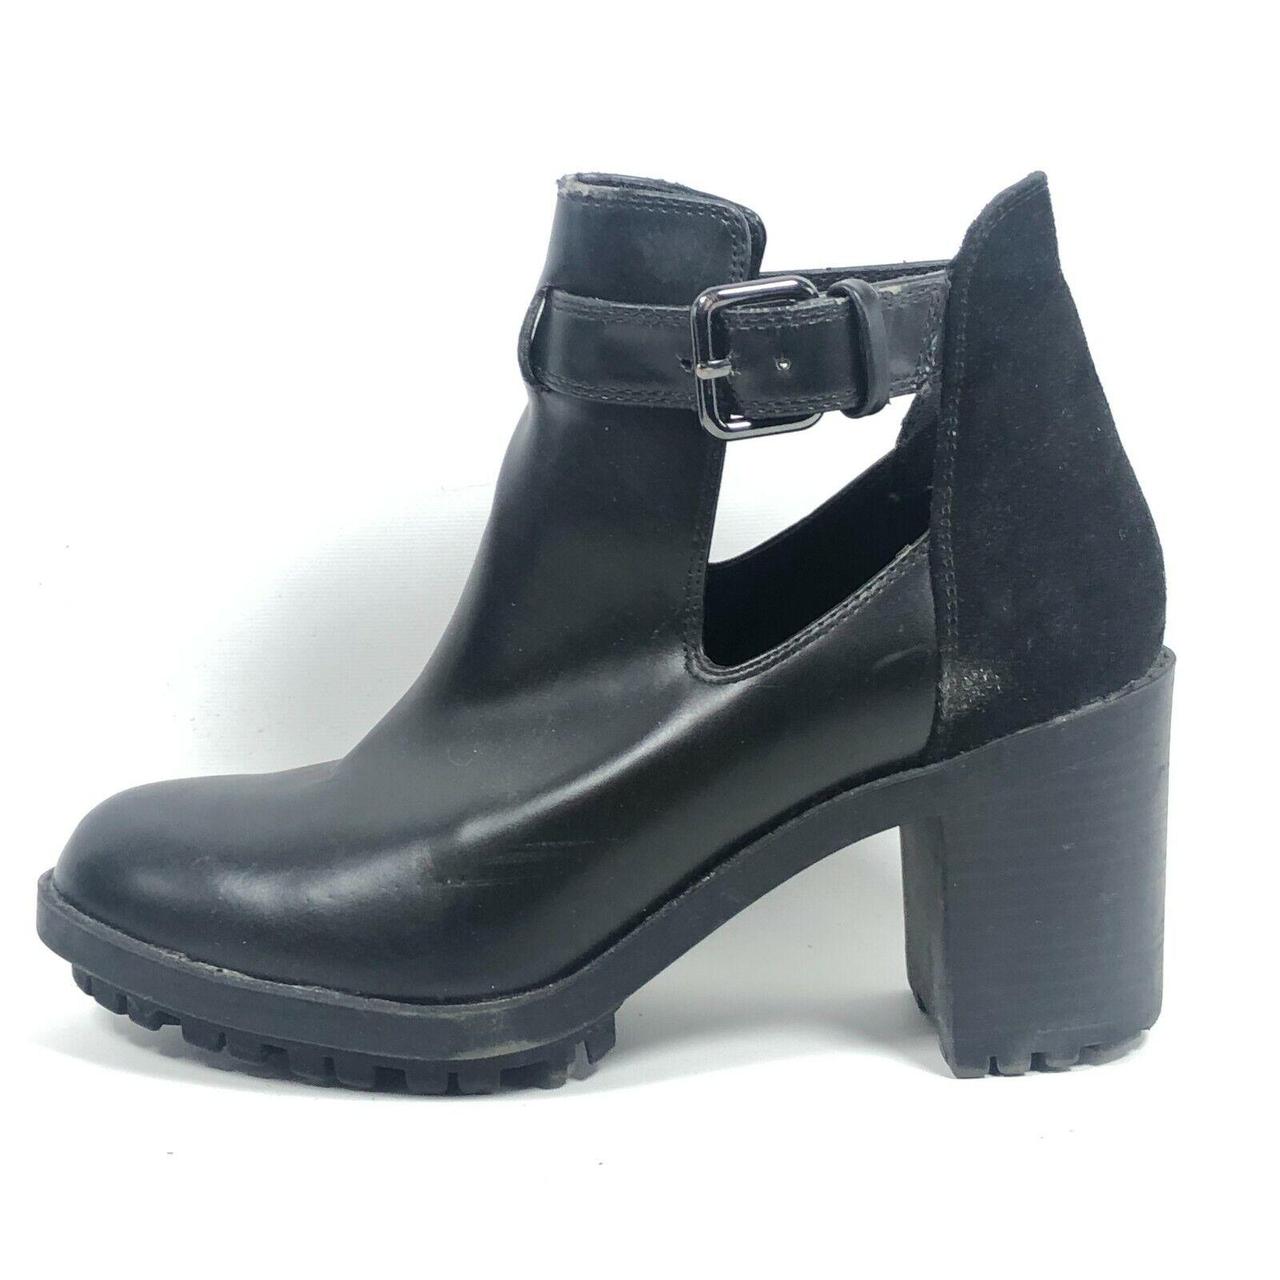 Zara - Buckled Strap Ankle Boots - Black - Women